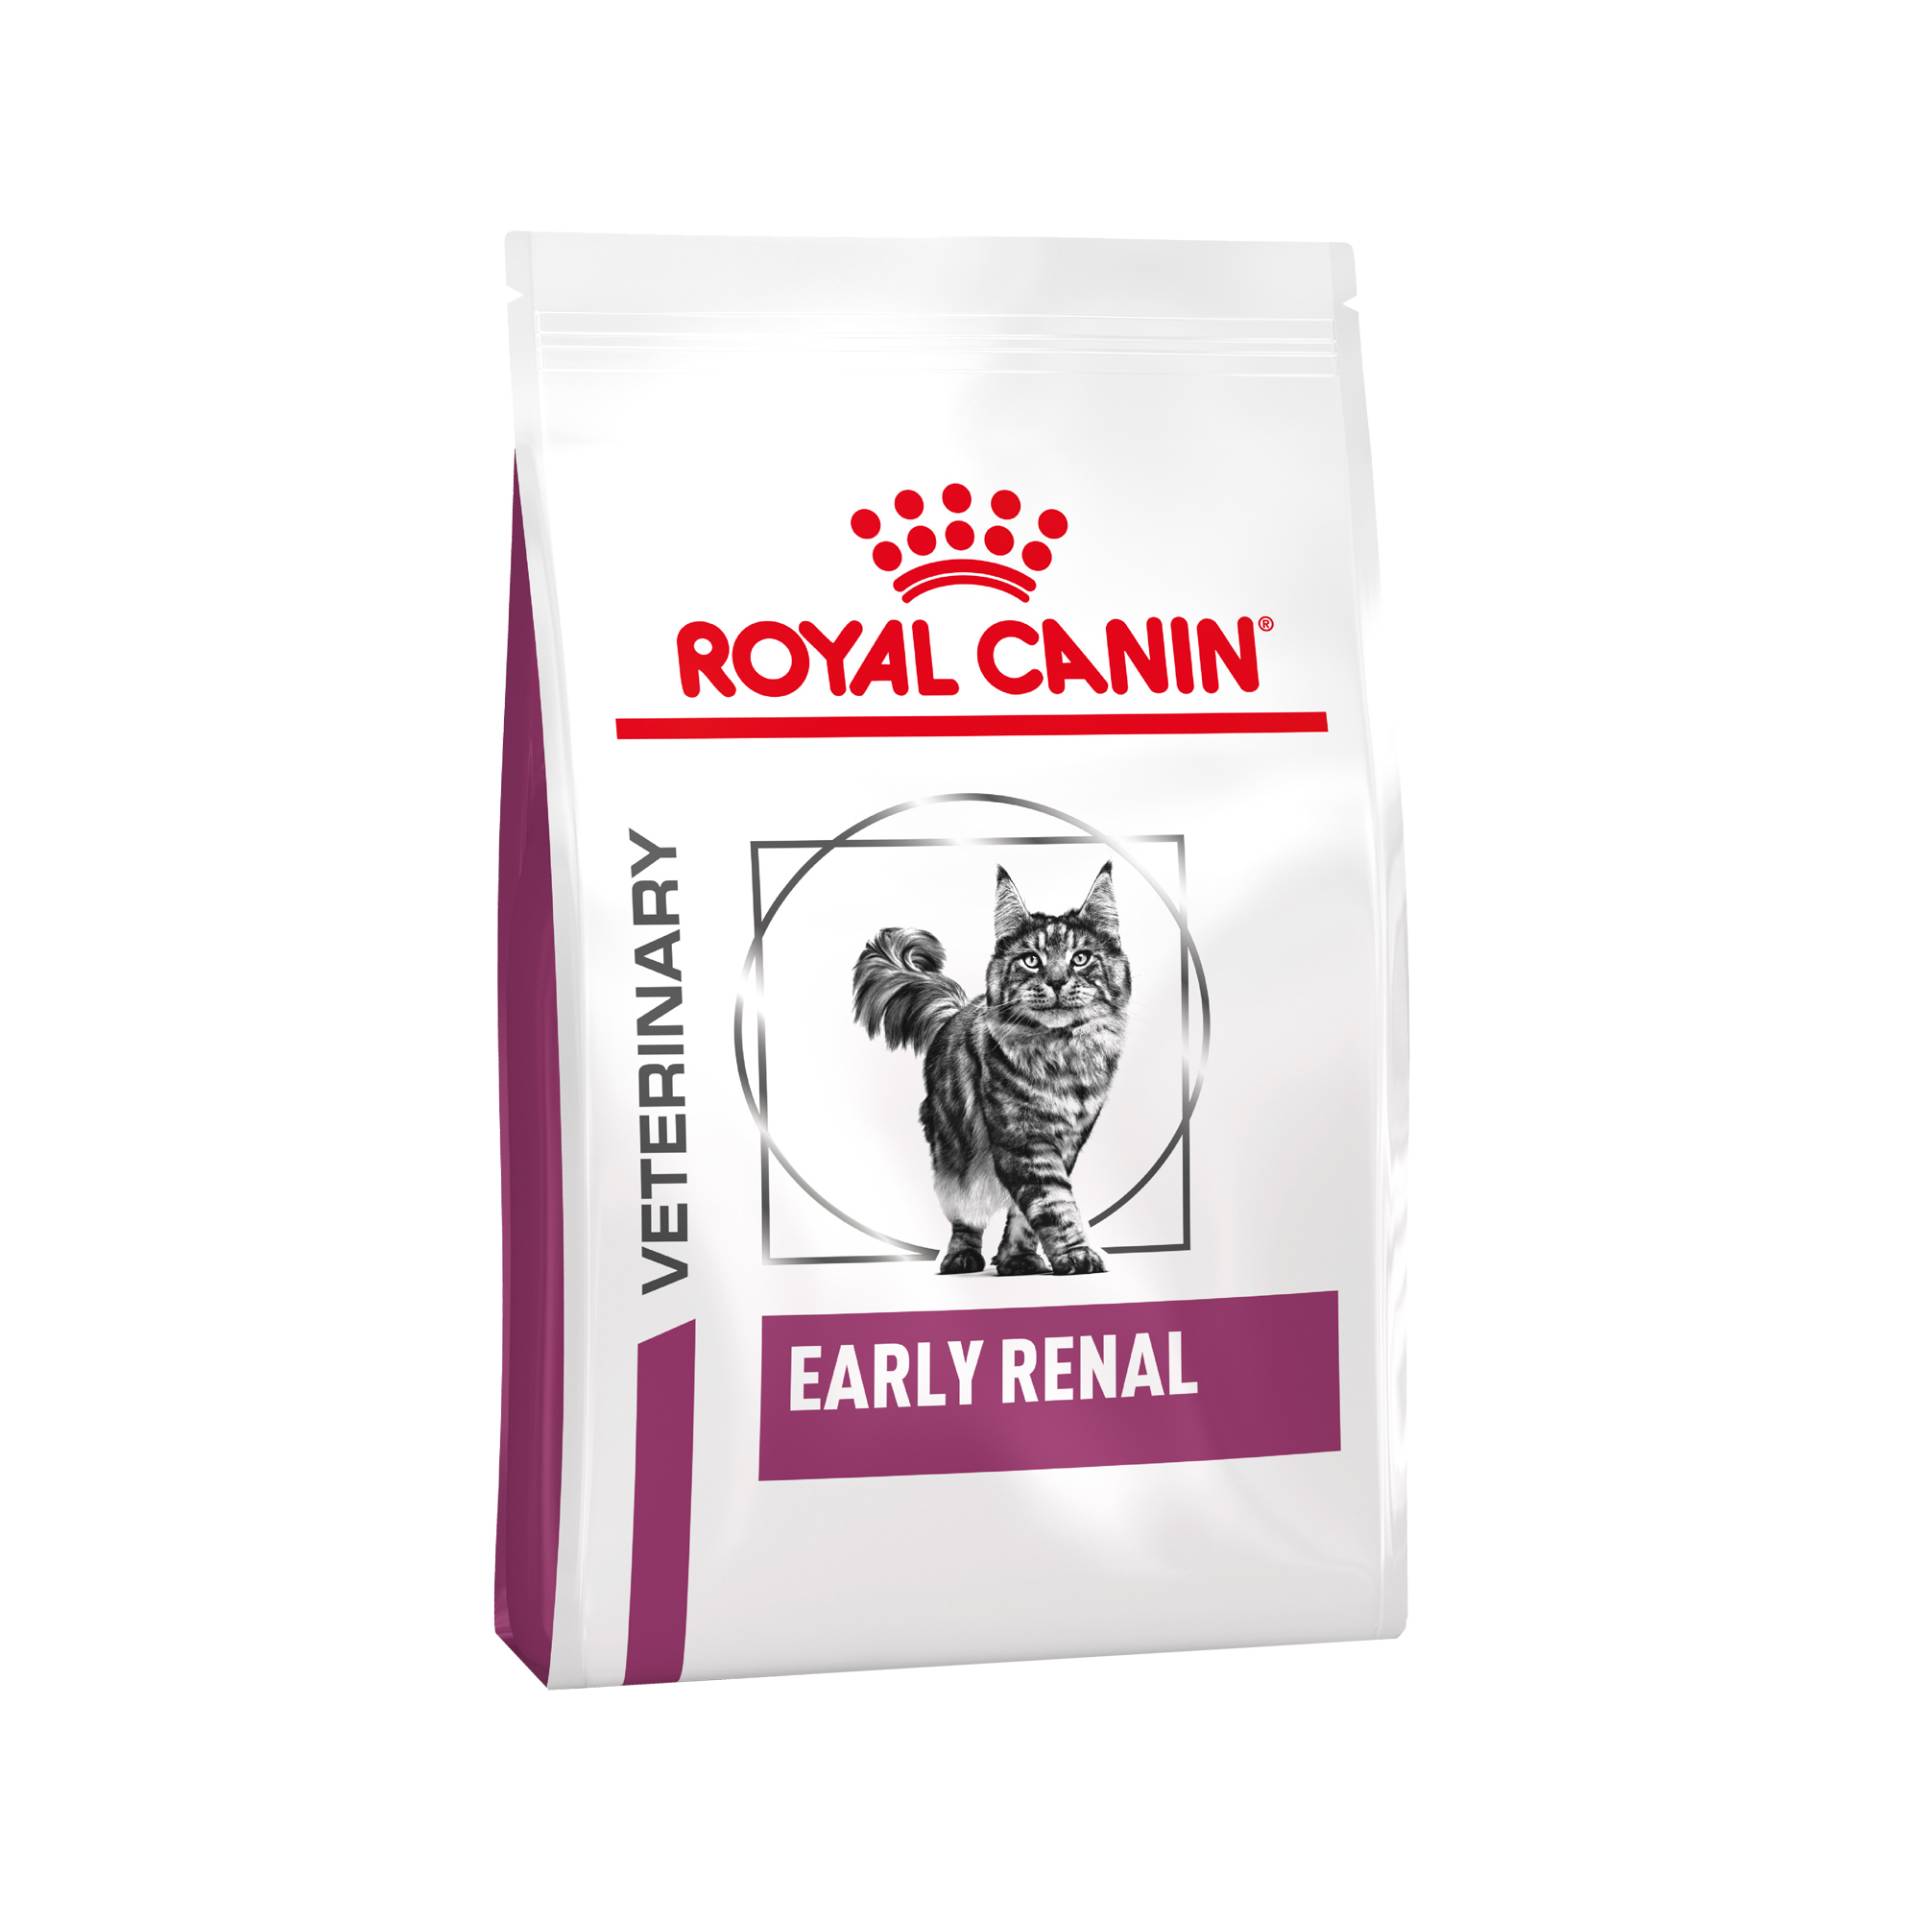 Royal Canin Early Renal - Katze - 400 g von Royal Canin